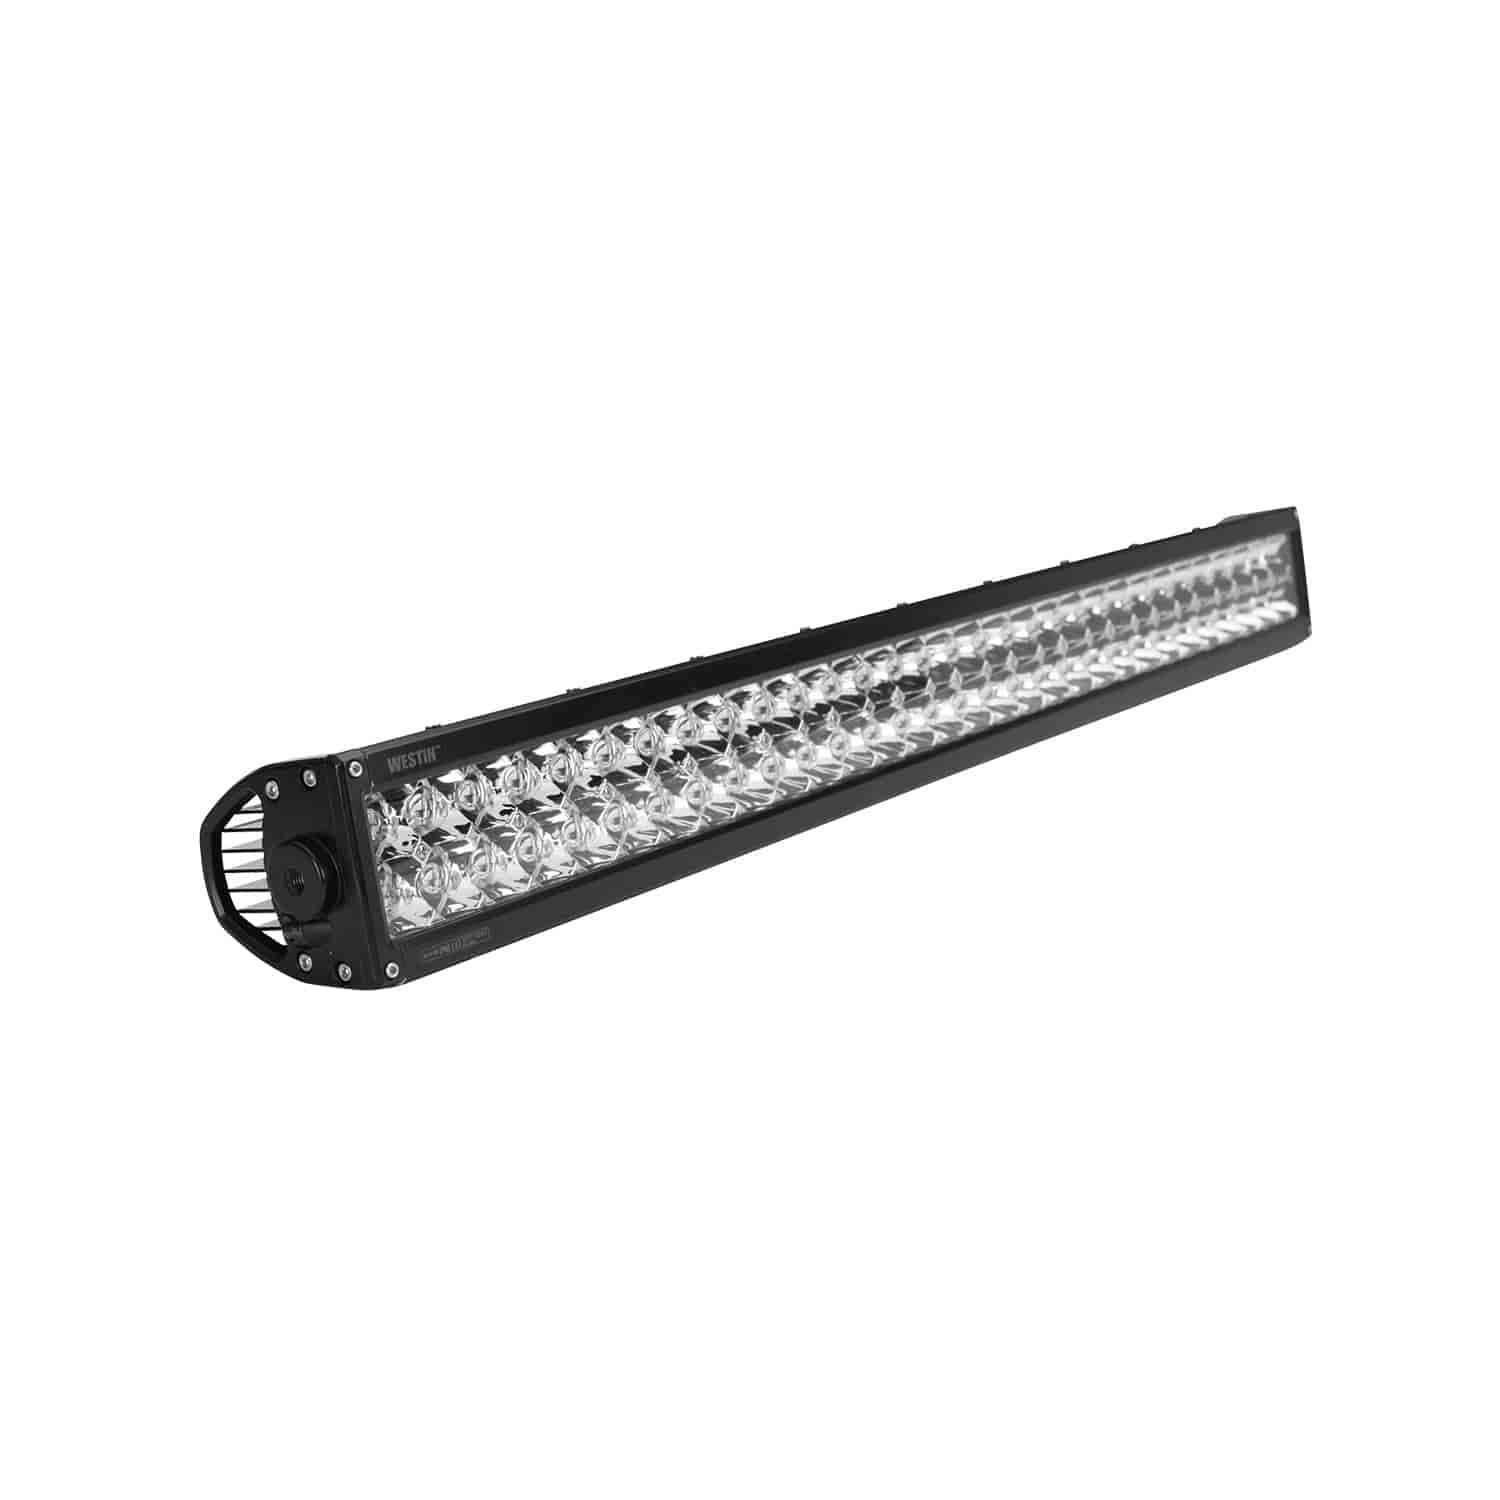 Low-Profile Double-Row LED Light Bar 30" Length